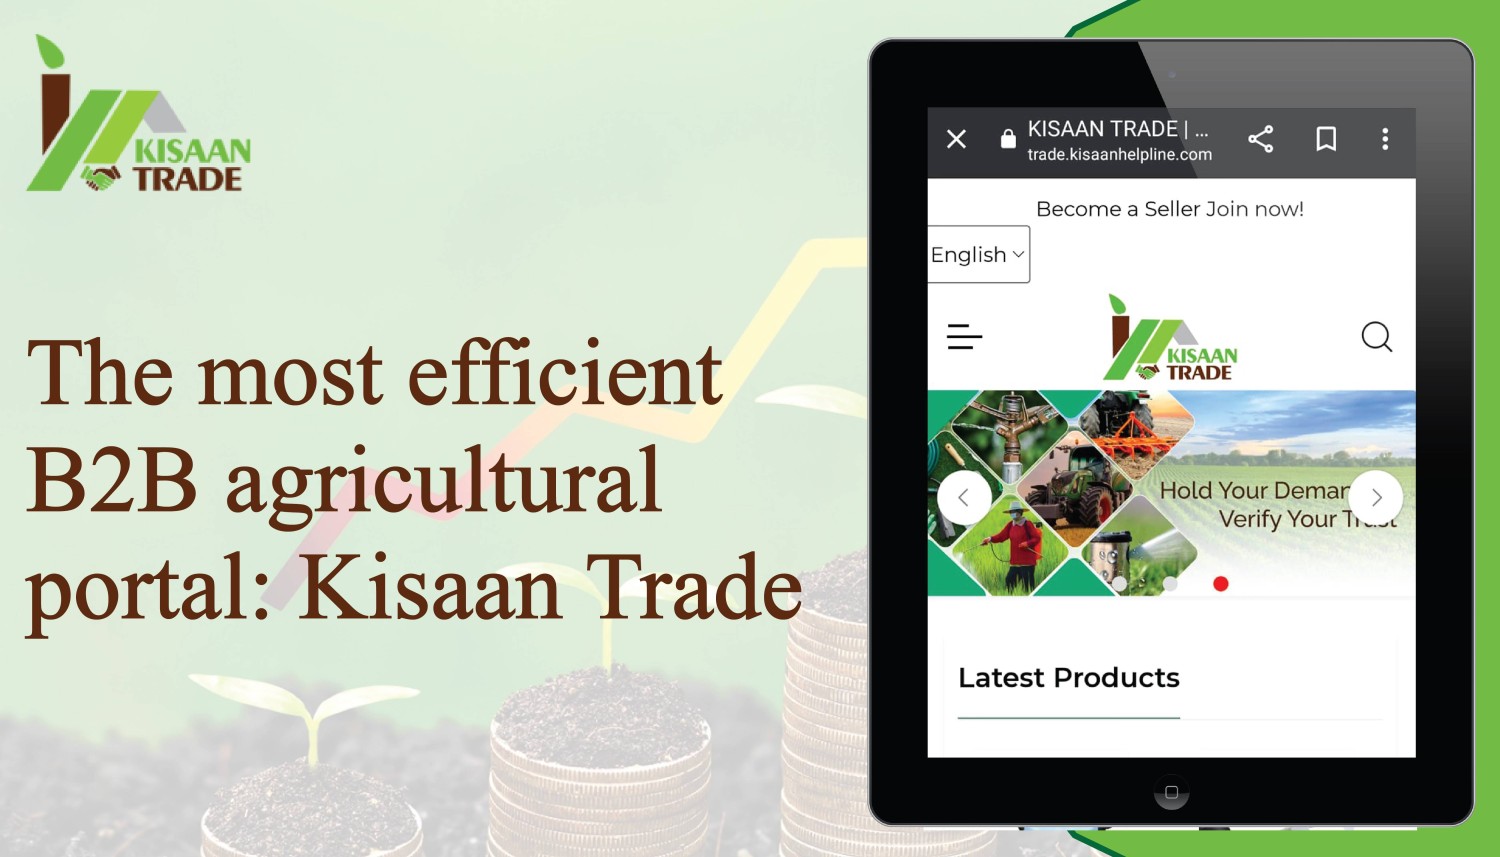 The most efficient B2B agricultural portal: Kisaan Trade